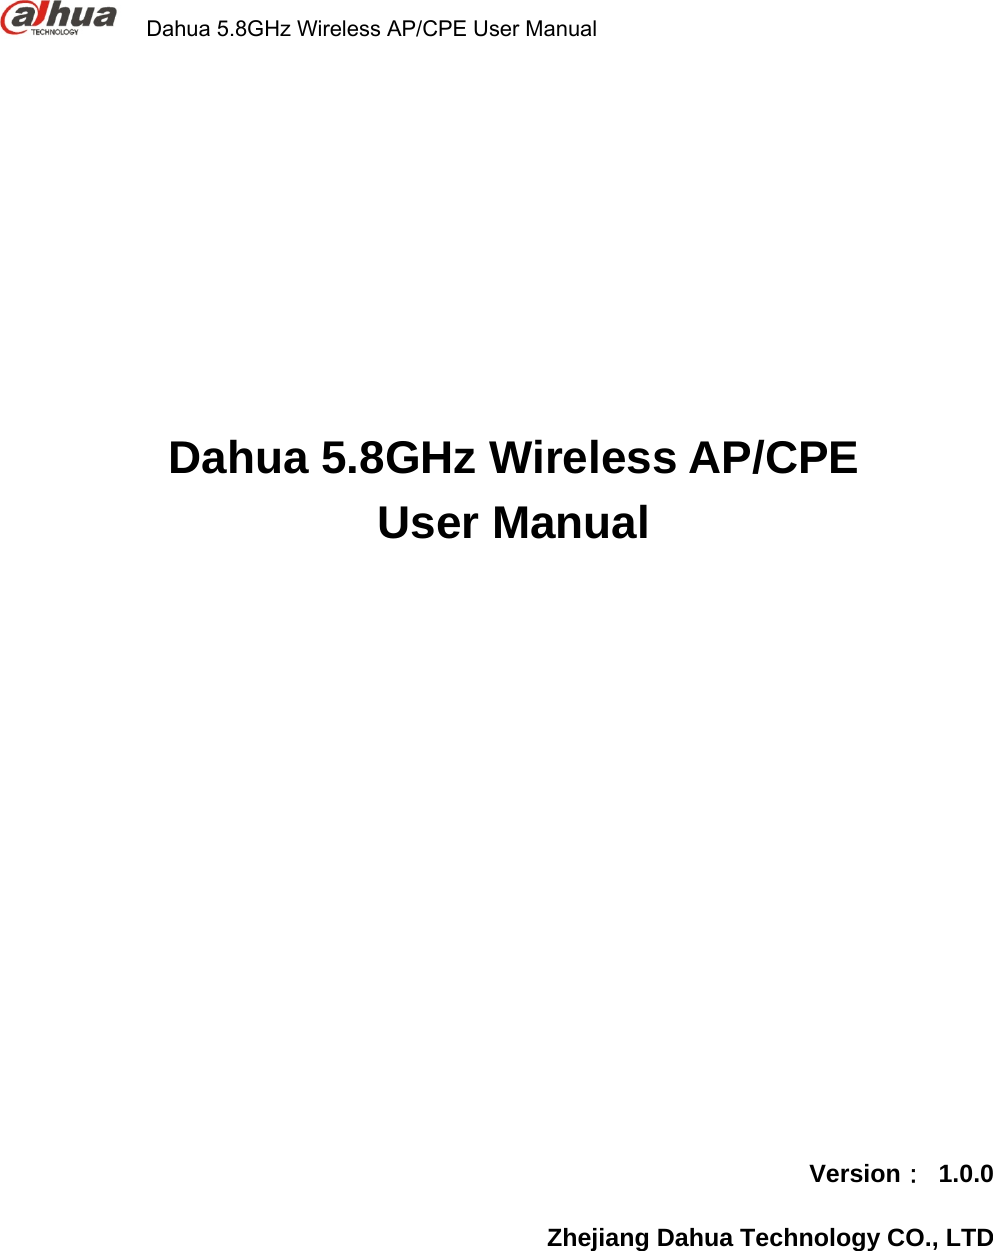             Dahua 5.8GHz Wireless AP/CPE User Manual        Dahua 5.8GHz Wireless AP/CPE User Manual        Version： 1.0.0 Zhejiang Dahua Technology CO., LTD 